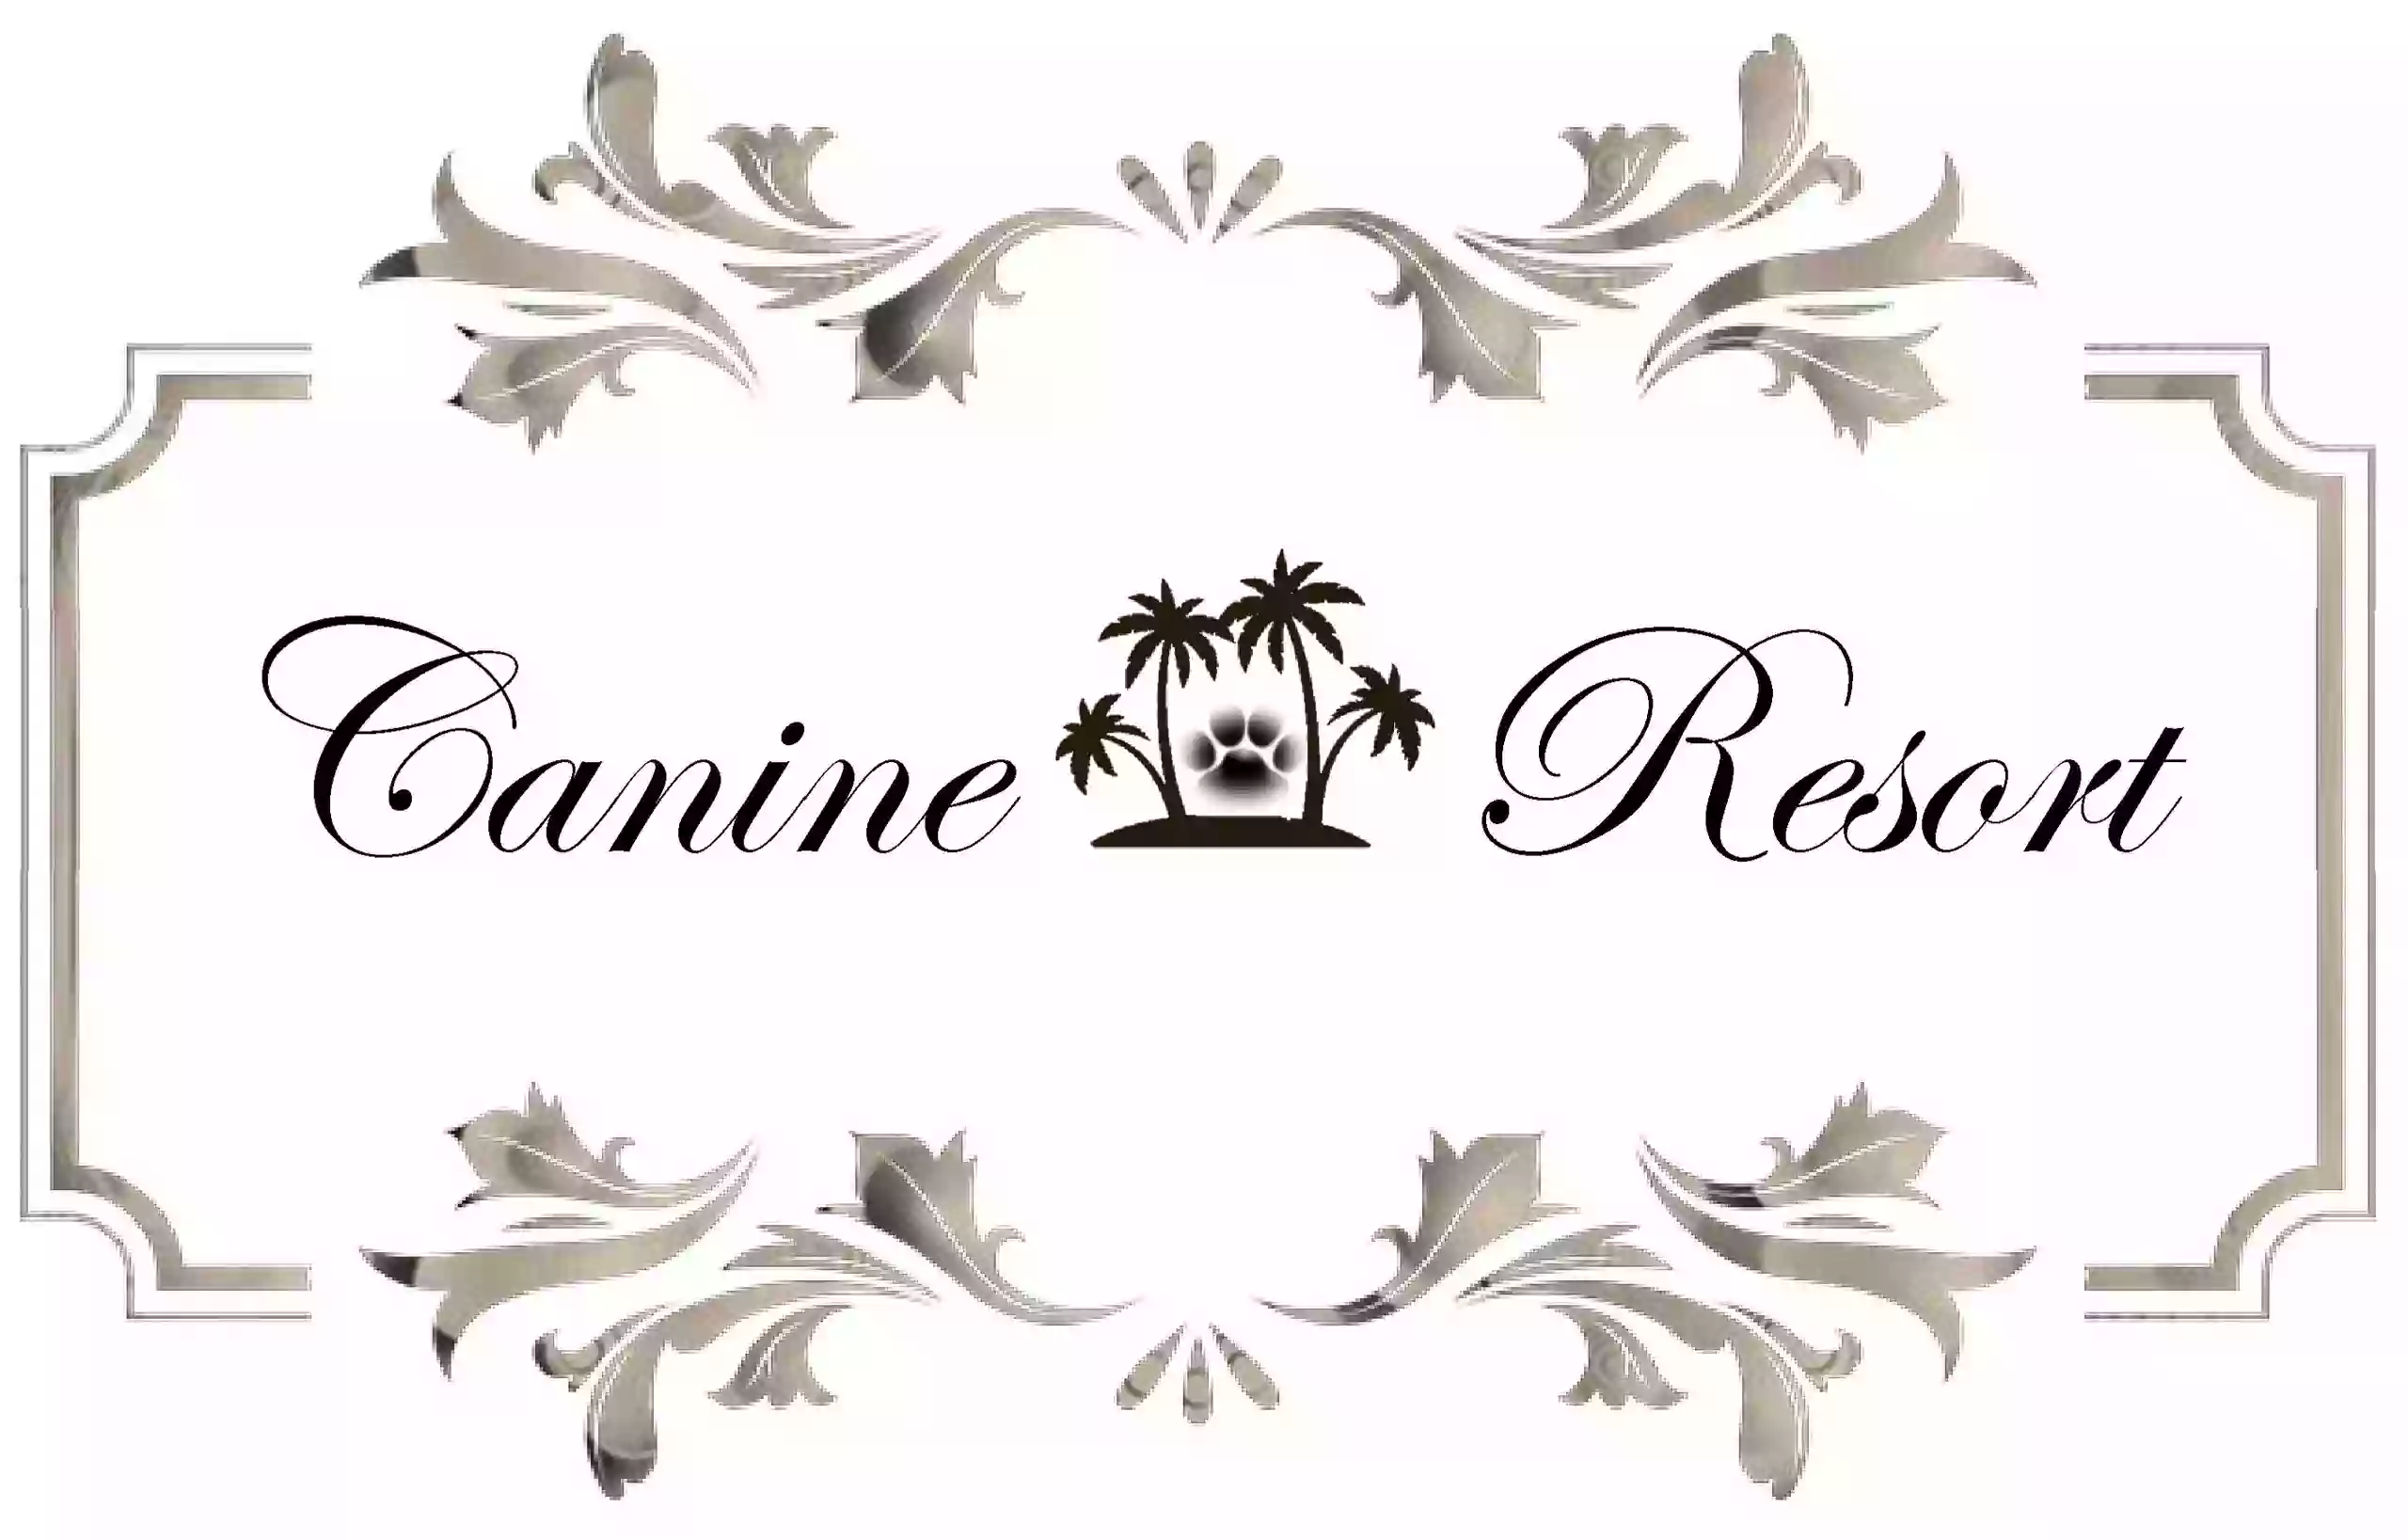 Canine Resort